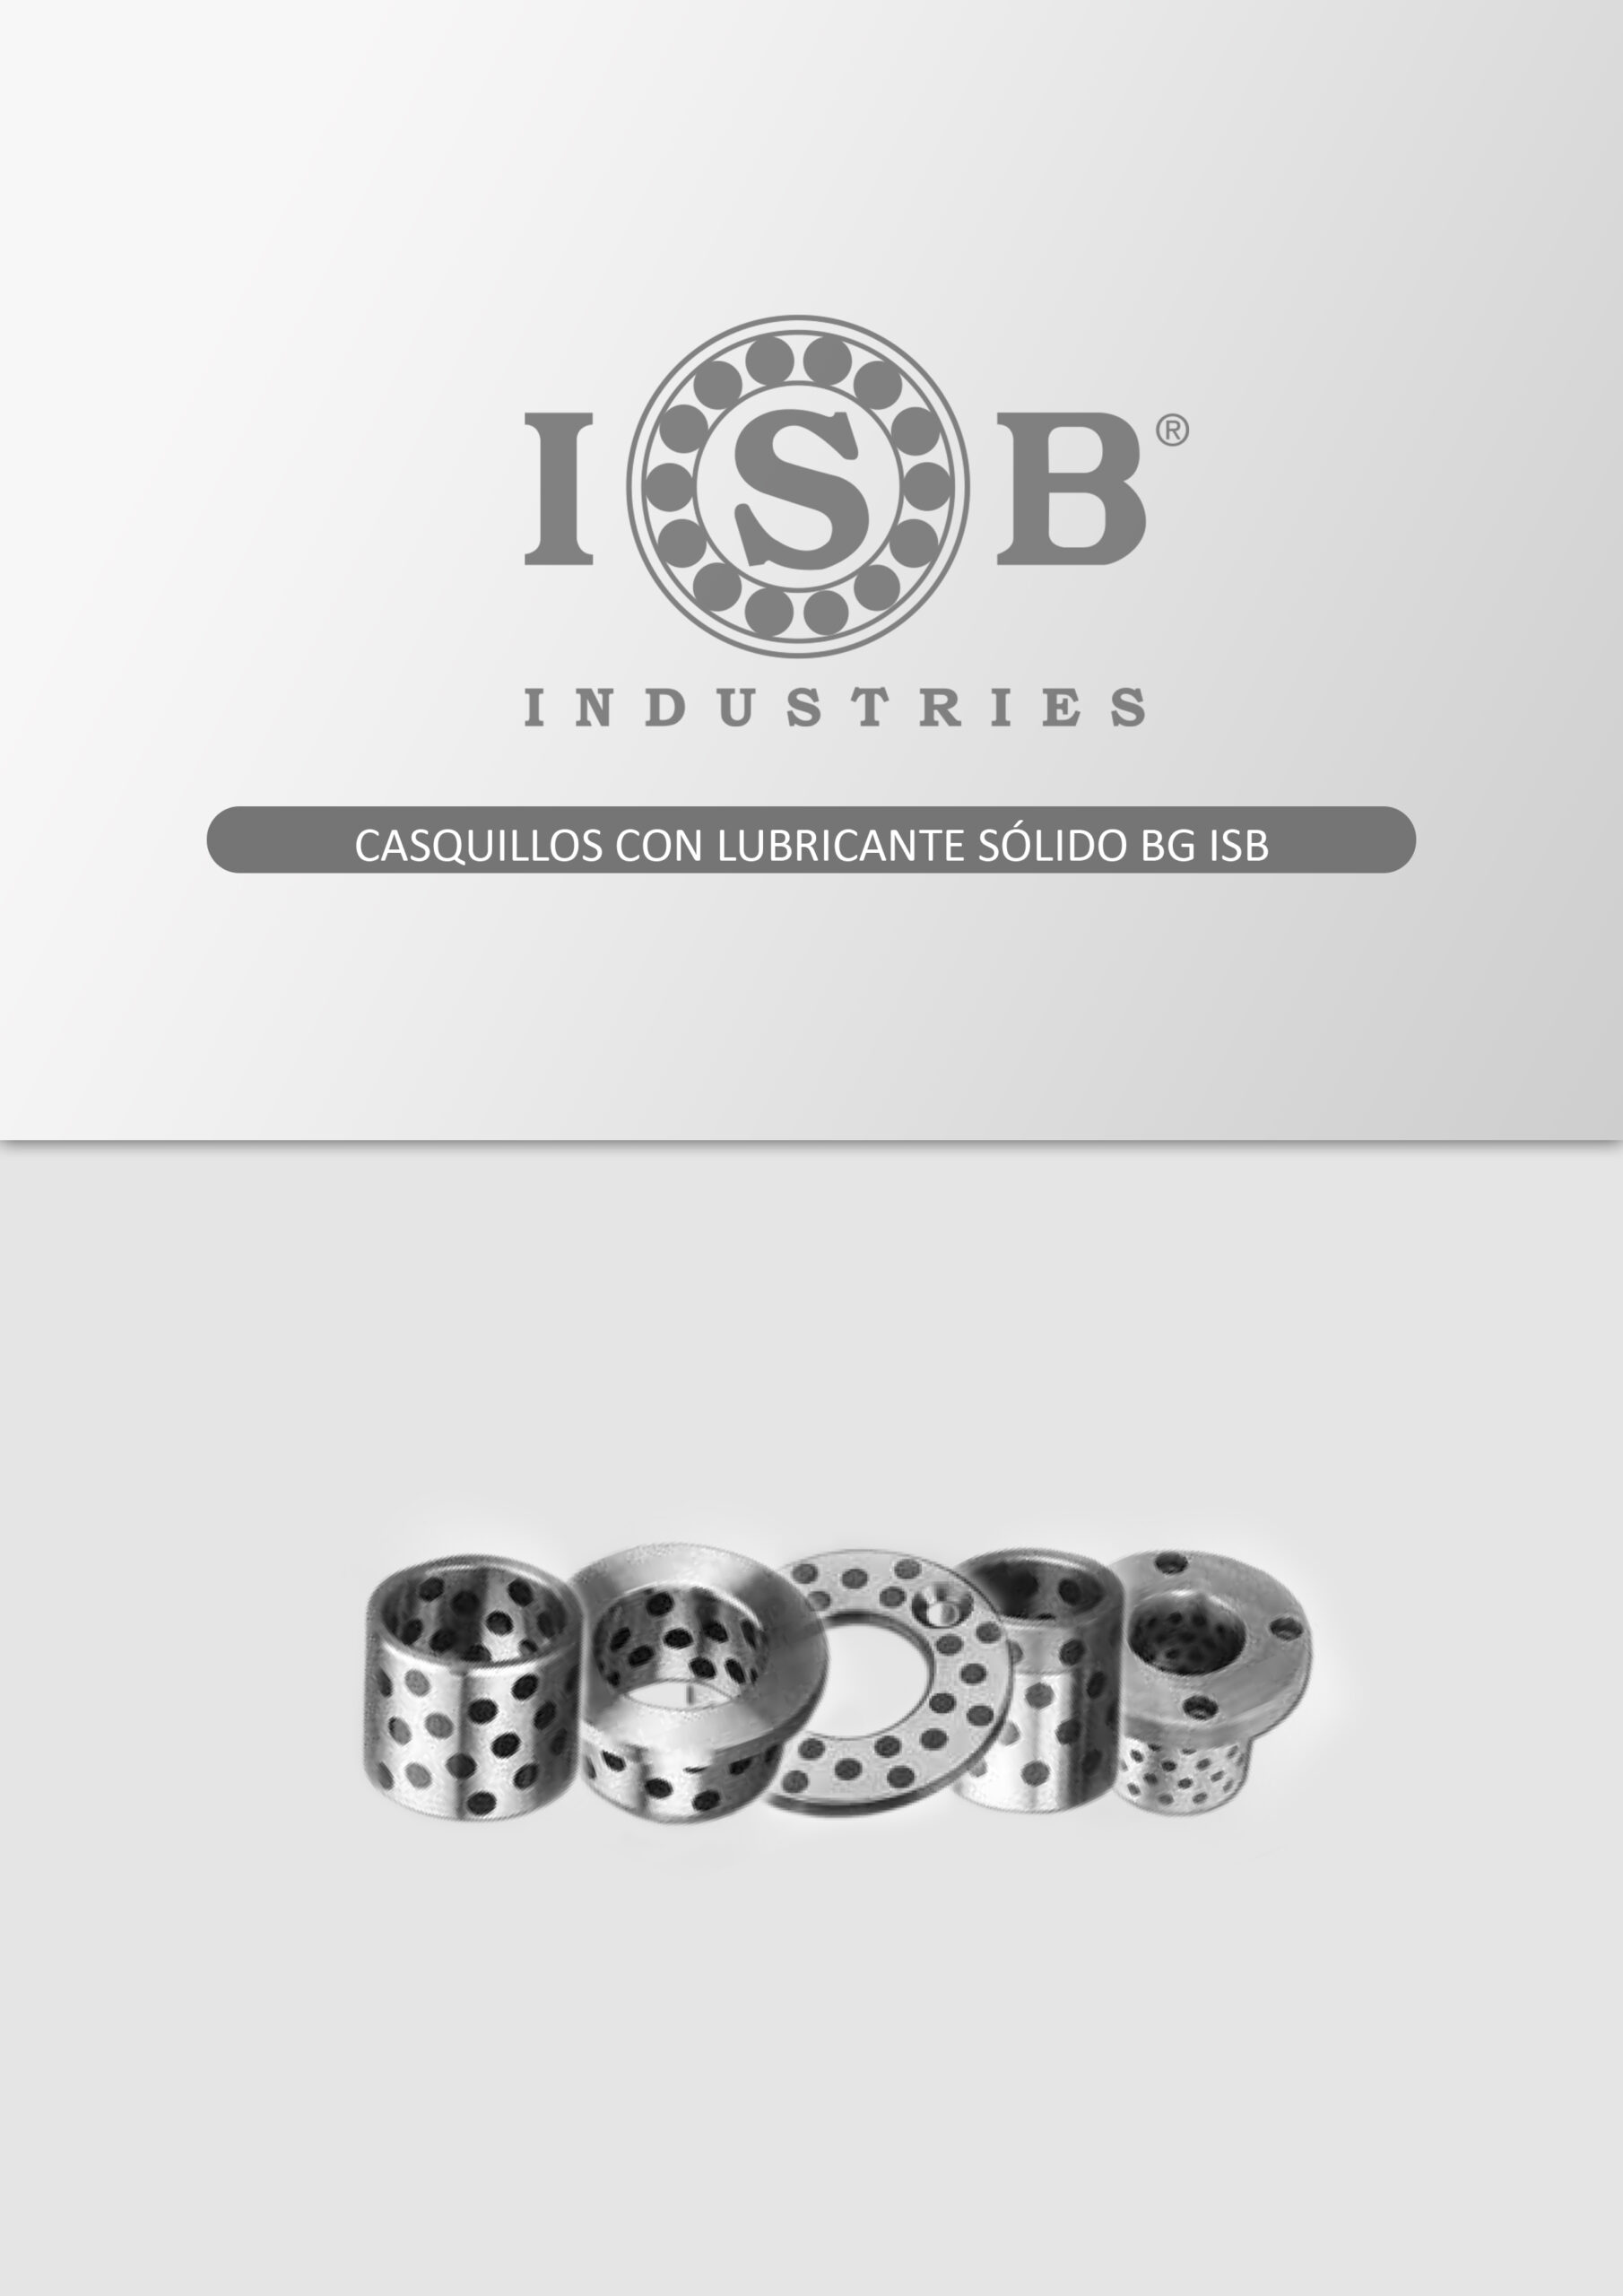 6.-Casquillos-con-lubricante-solido-BG-ISB-scaled.jpg